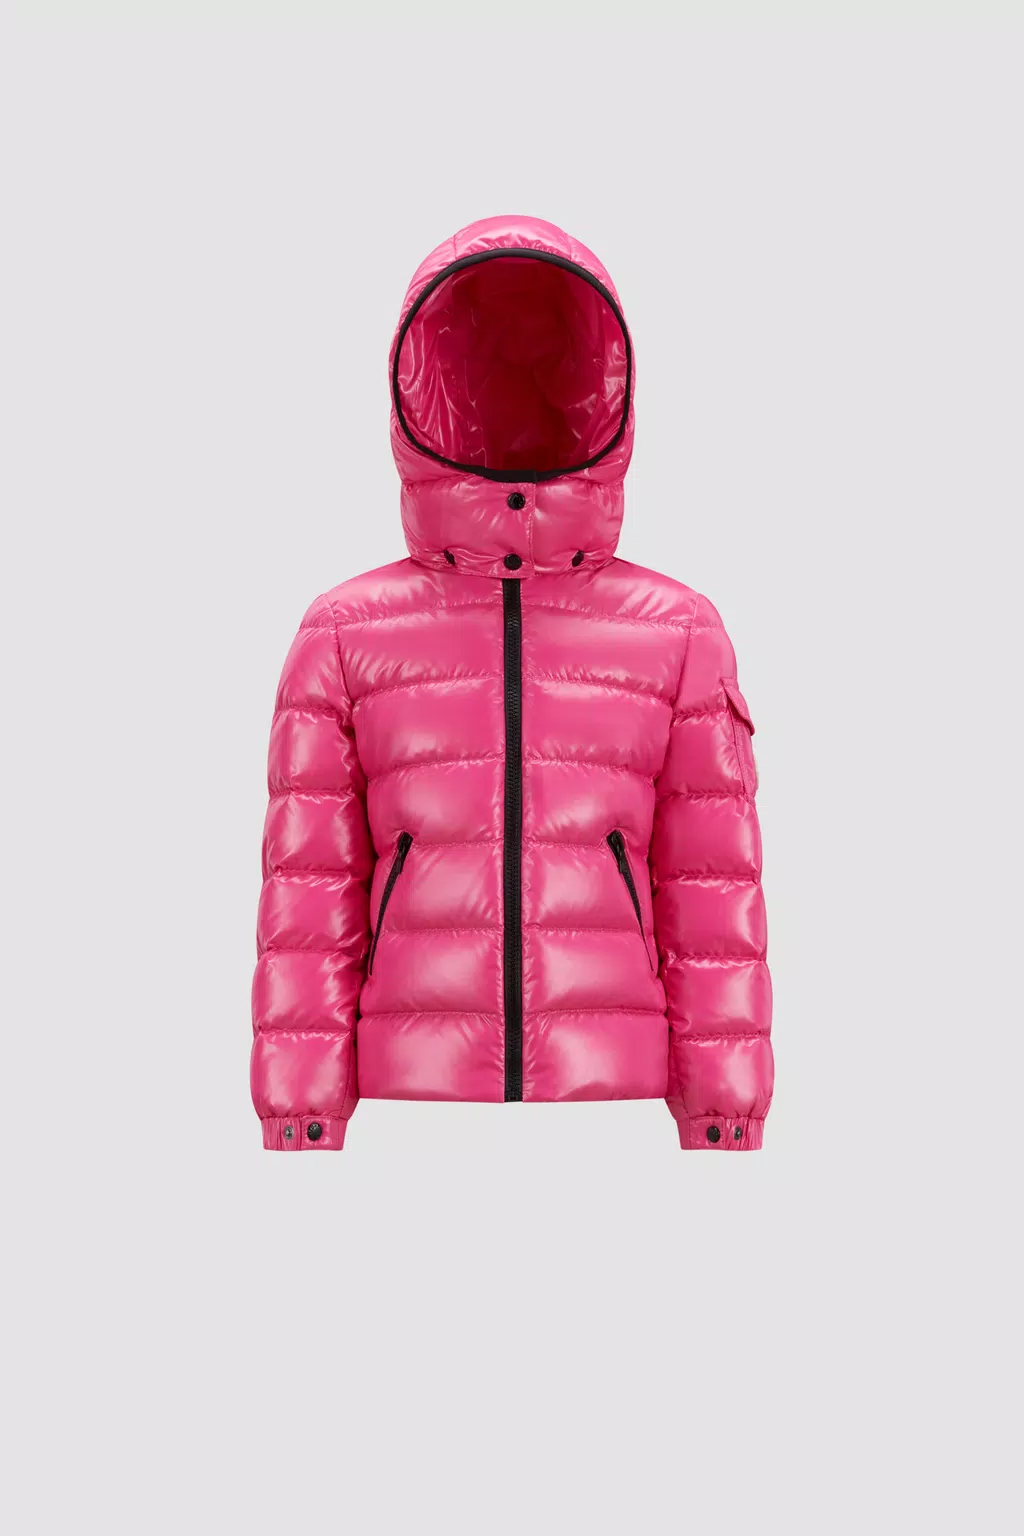 Girls' Outerwear - Coats, Jackets & Vests | Moncler UK